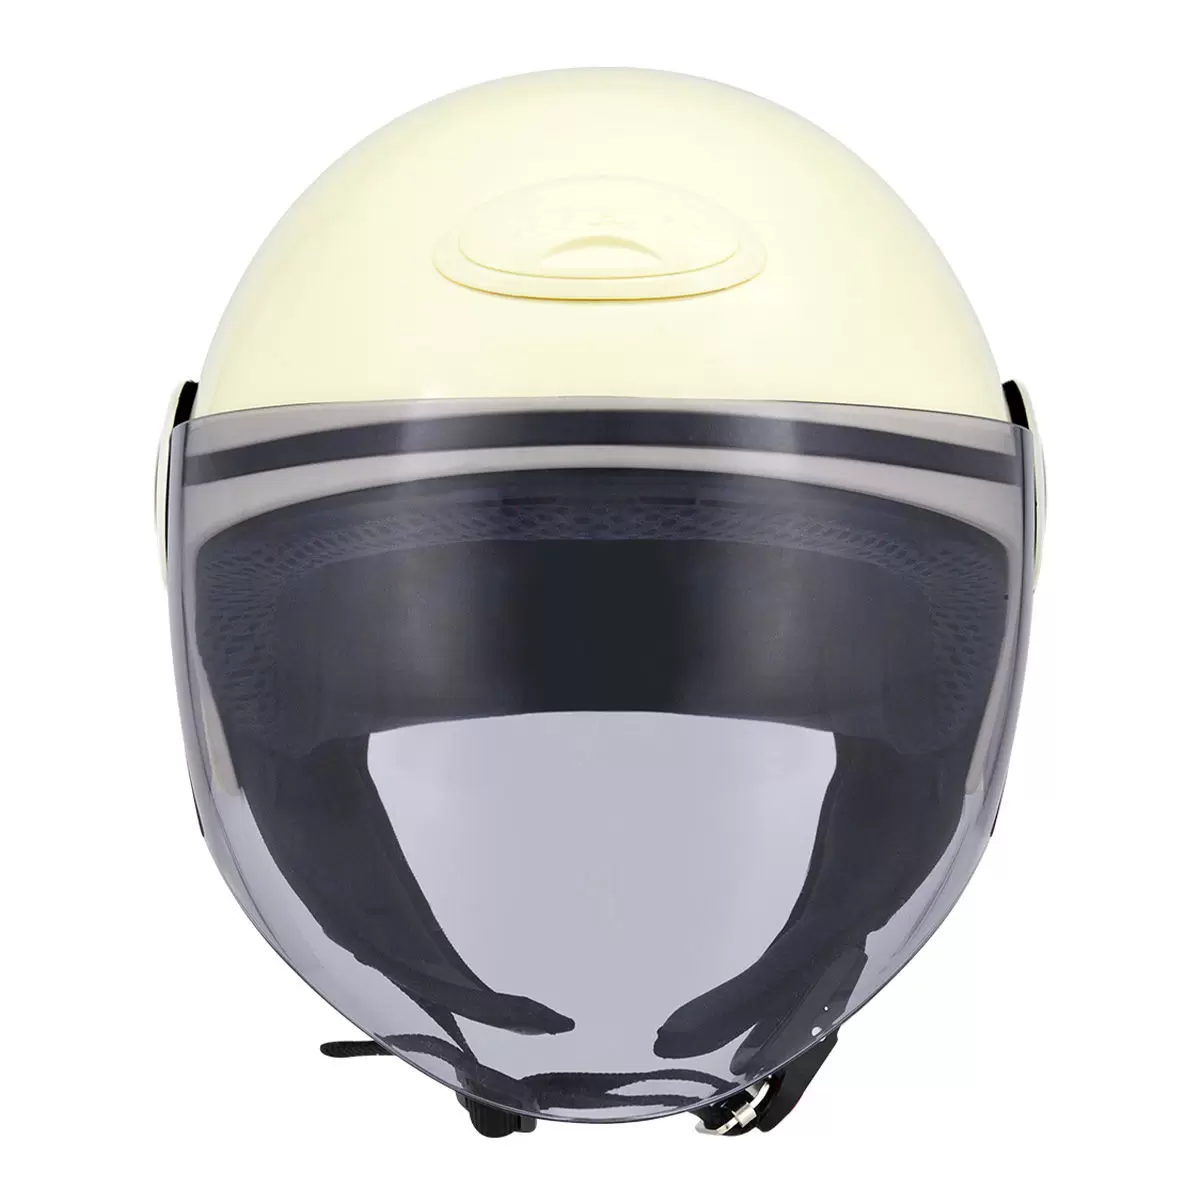 M2R 1/2罩安全帽 騎乘機車用防護頭盔 M-506 亮米 L